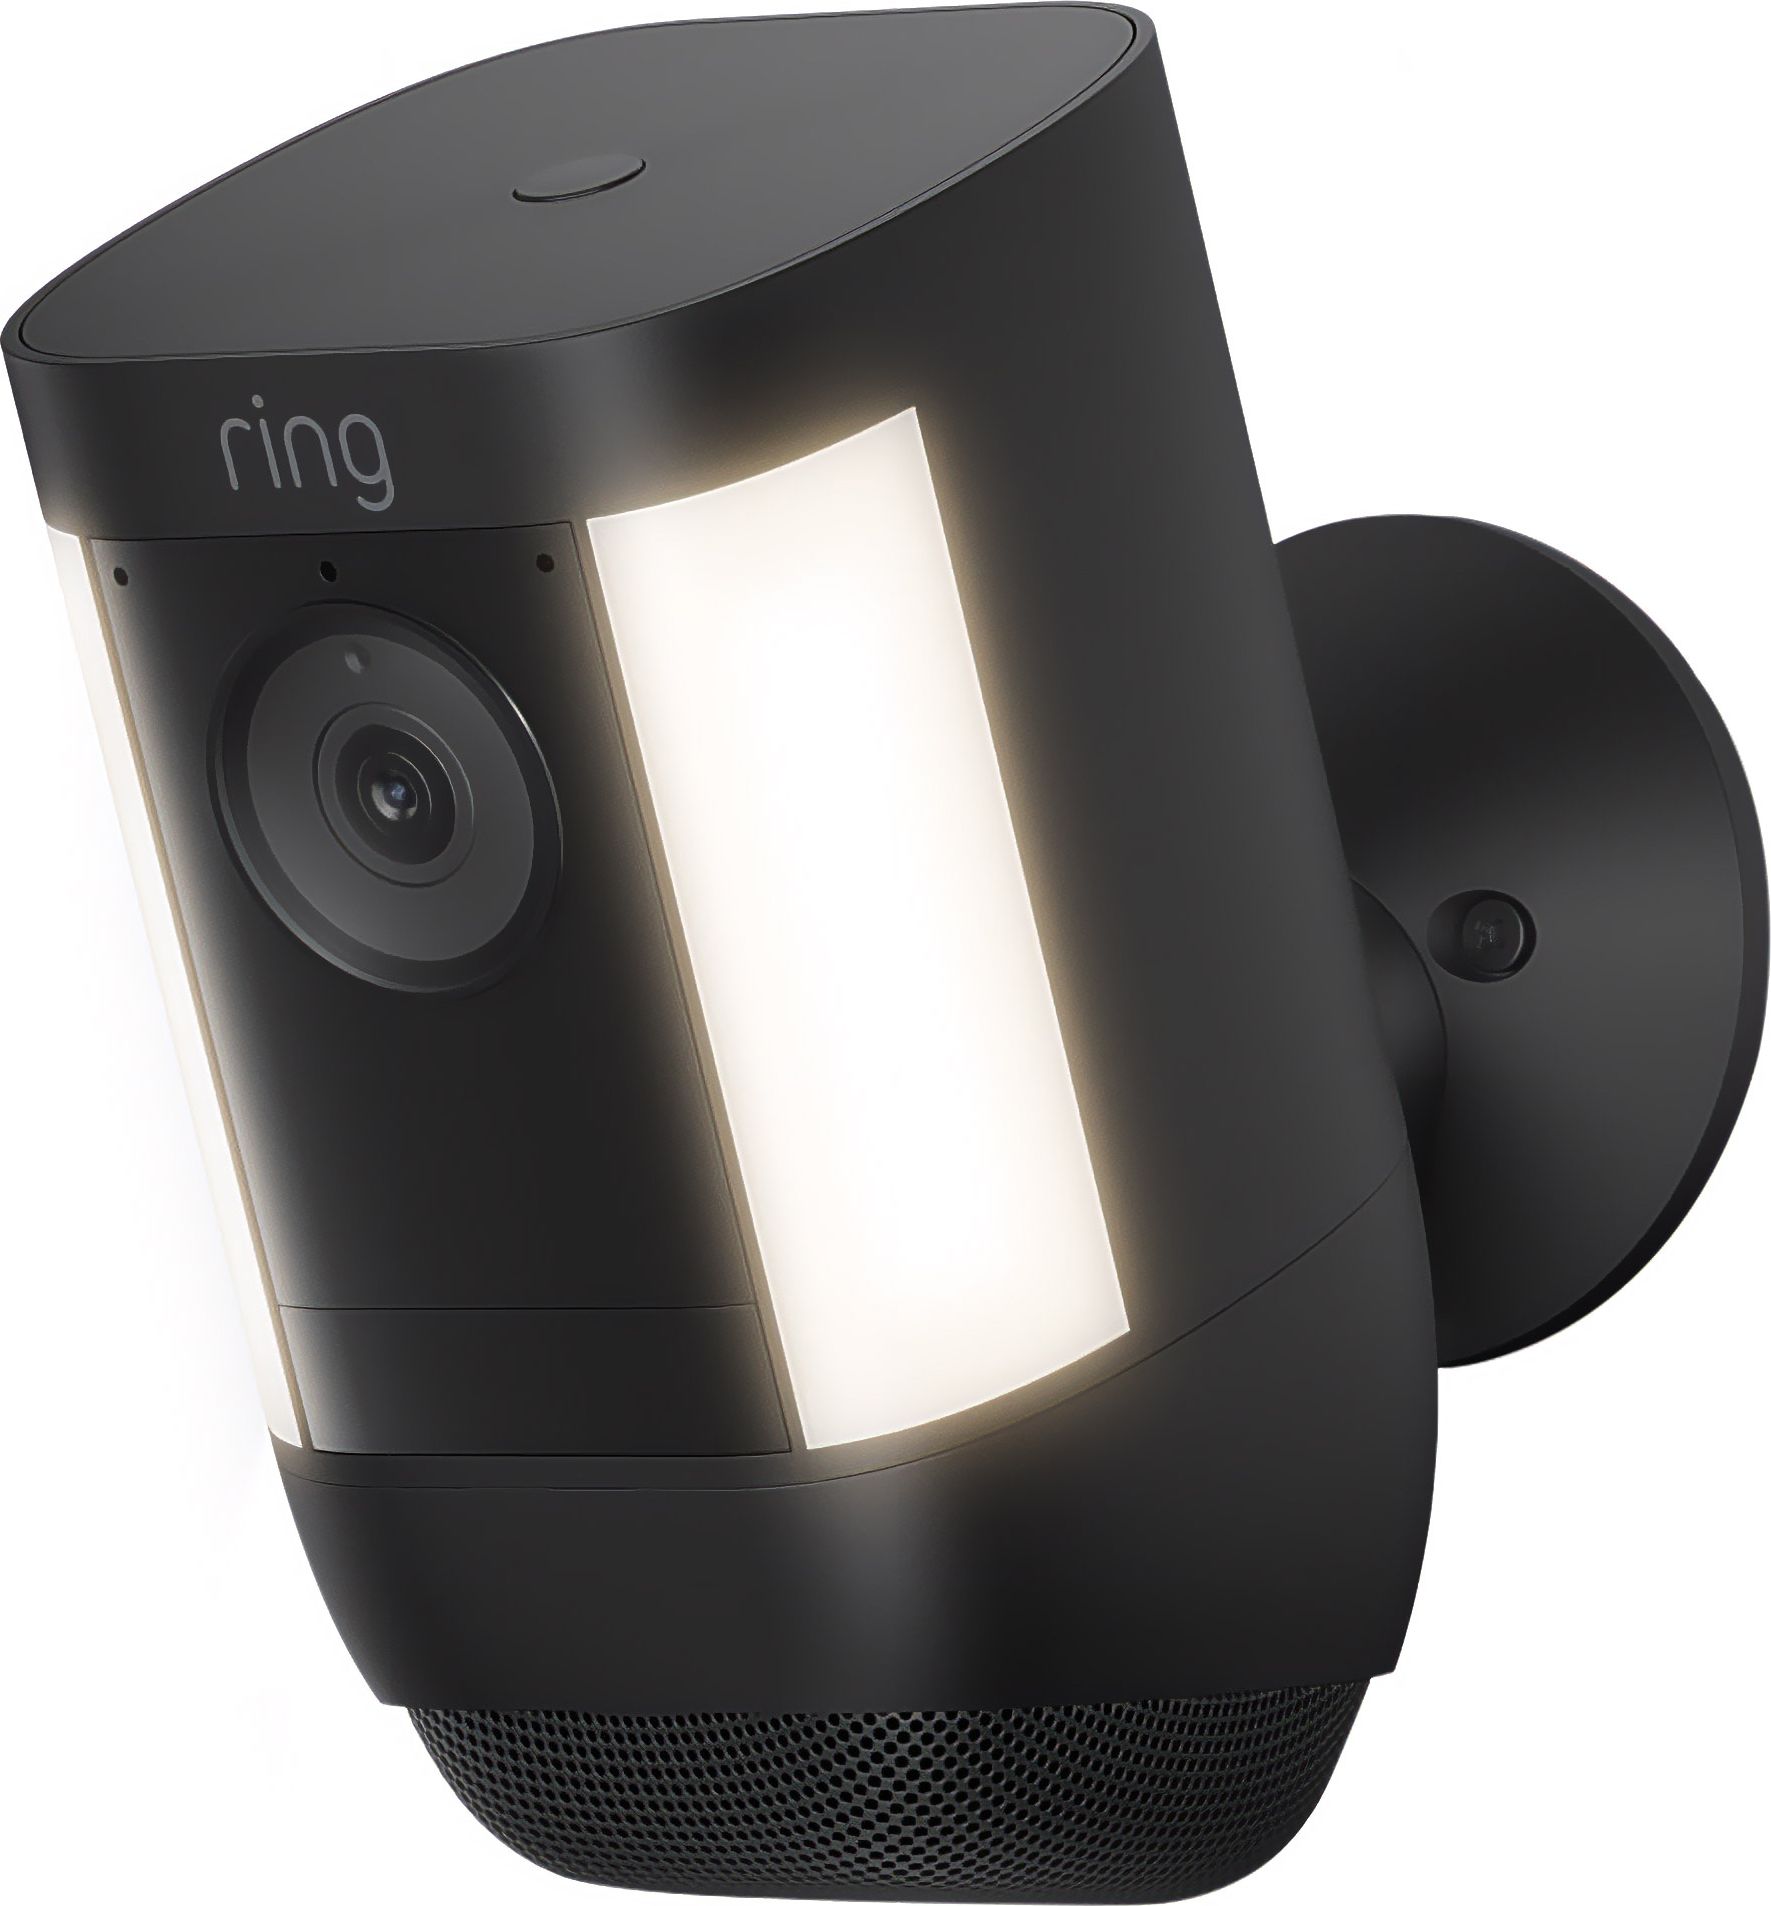 Ring Battery Powered Spotlight Cam Pro Full HD 1080p Smart Home Security Camera - Black, Black